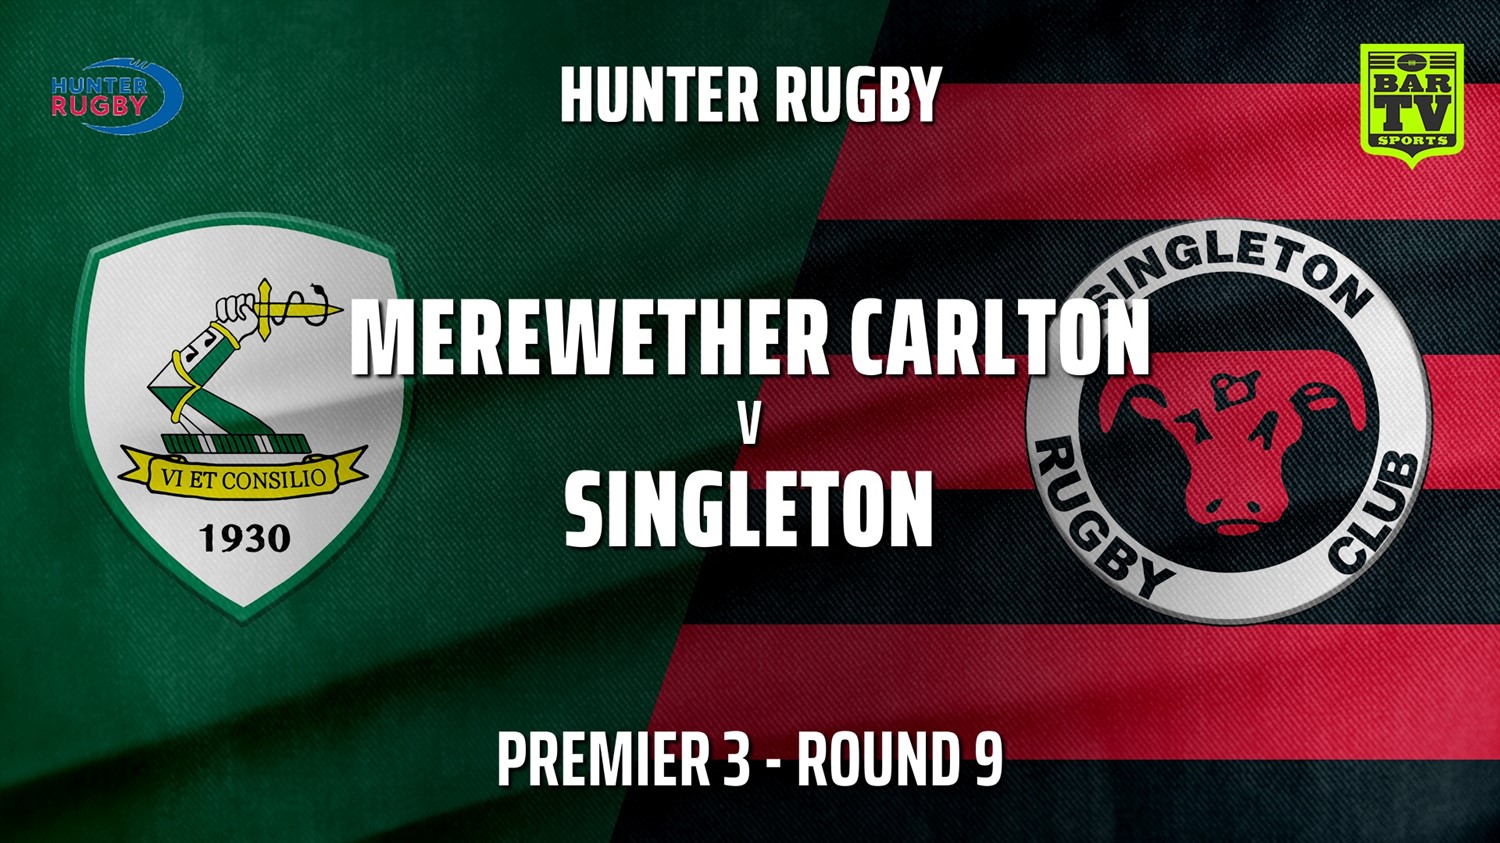 210619-Hunter Rugby Round 9 - Premier 3 - Merewether Carlton v Singleton Bulls Slate Image